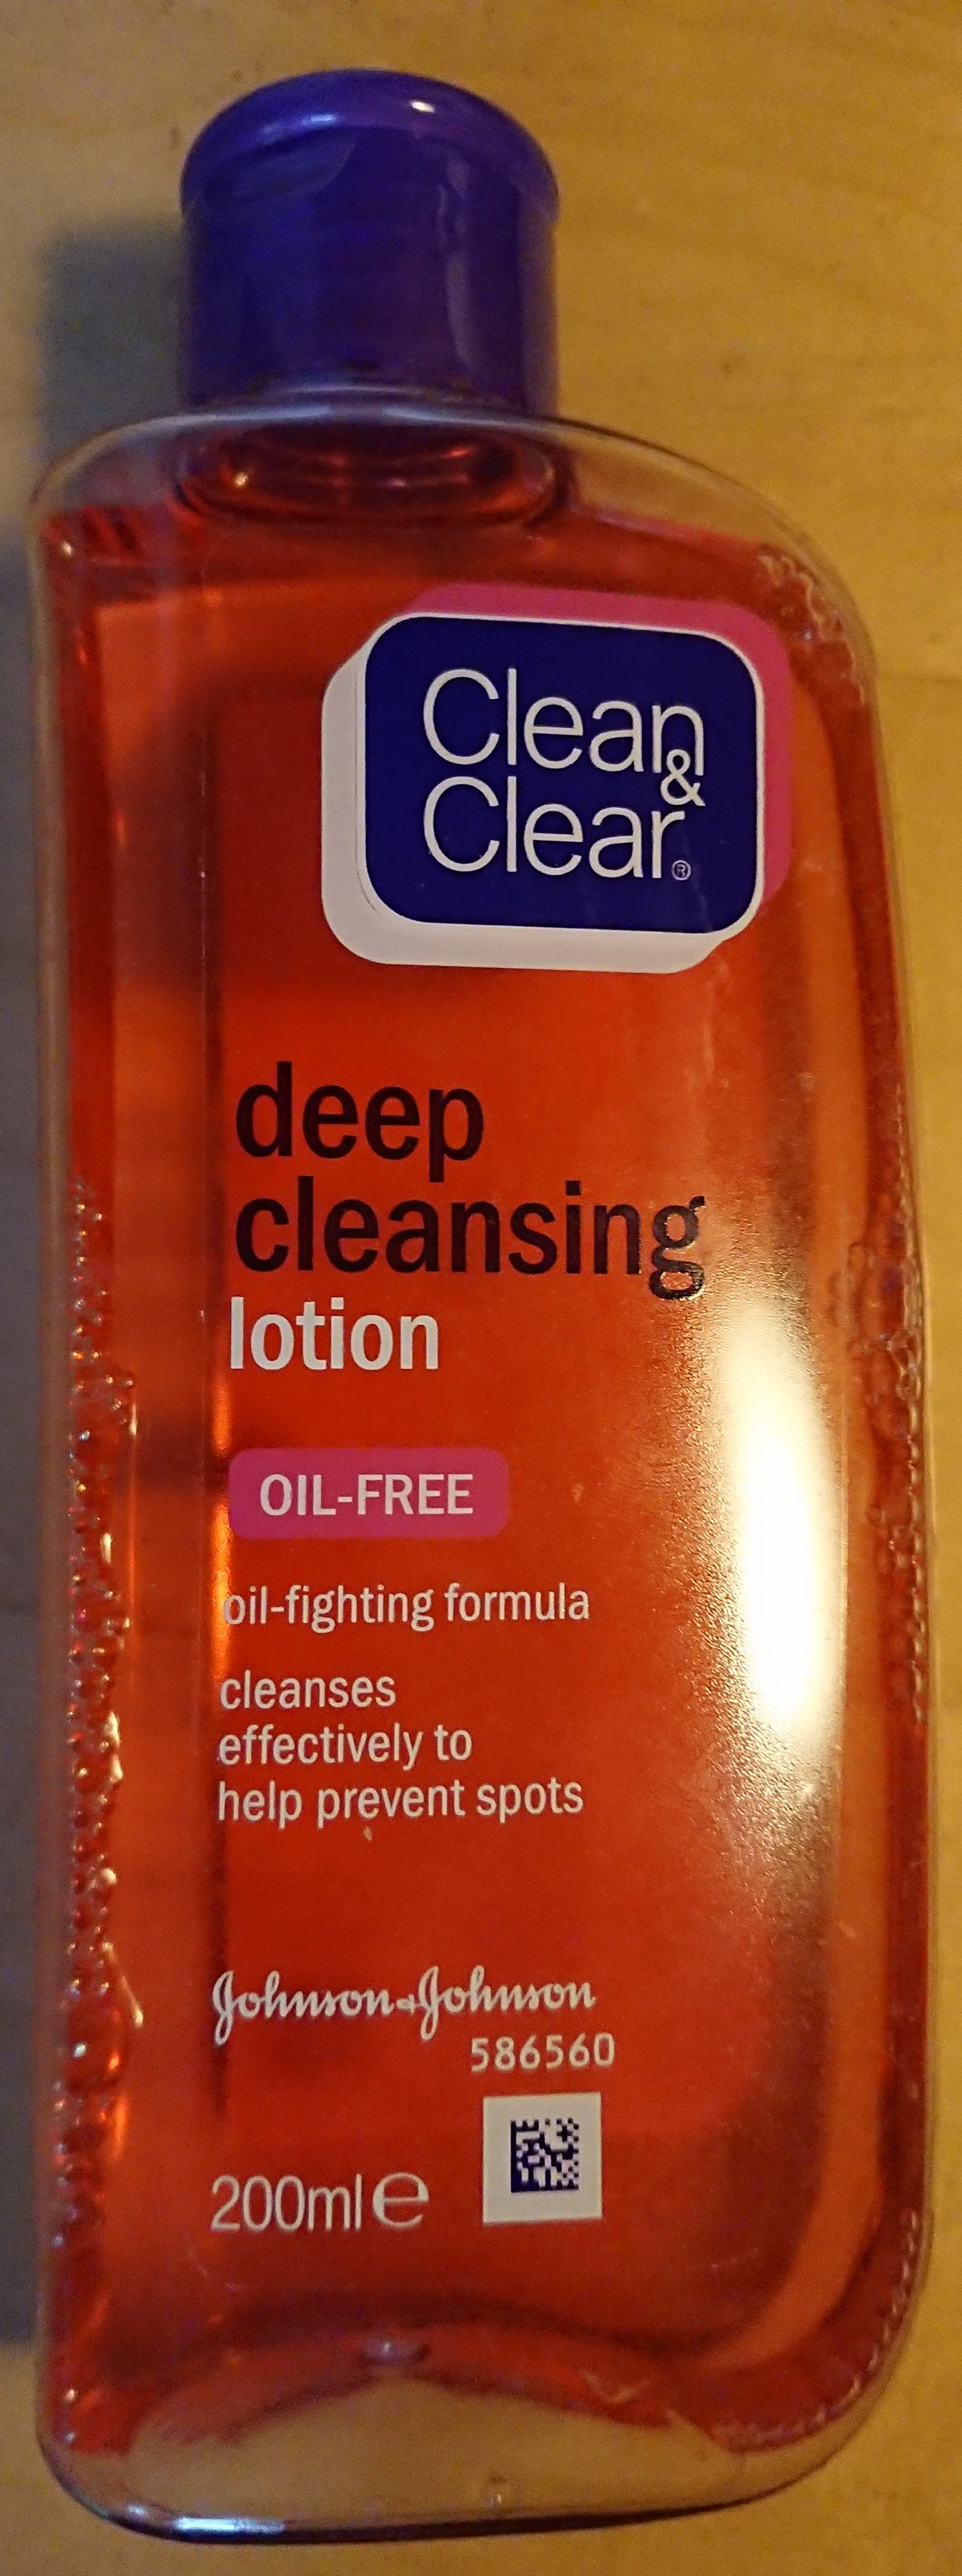 Deep cleansing lotion - Product - en